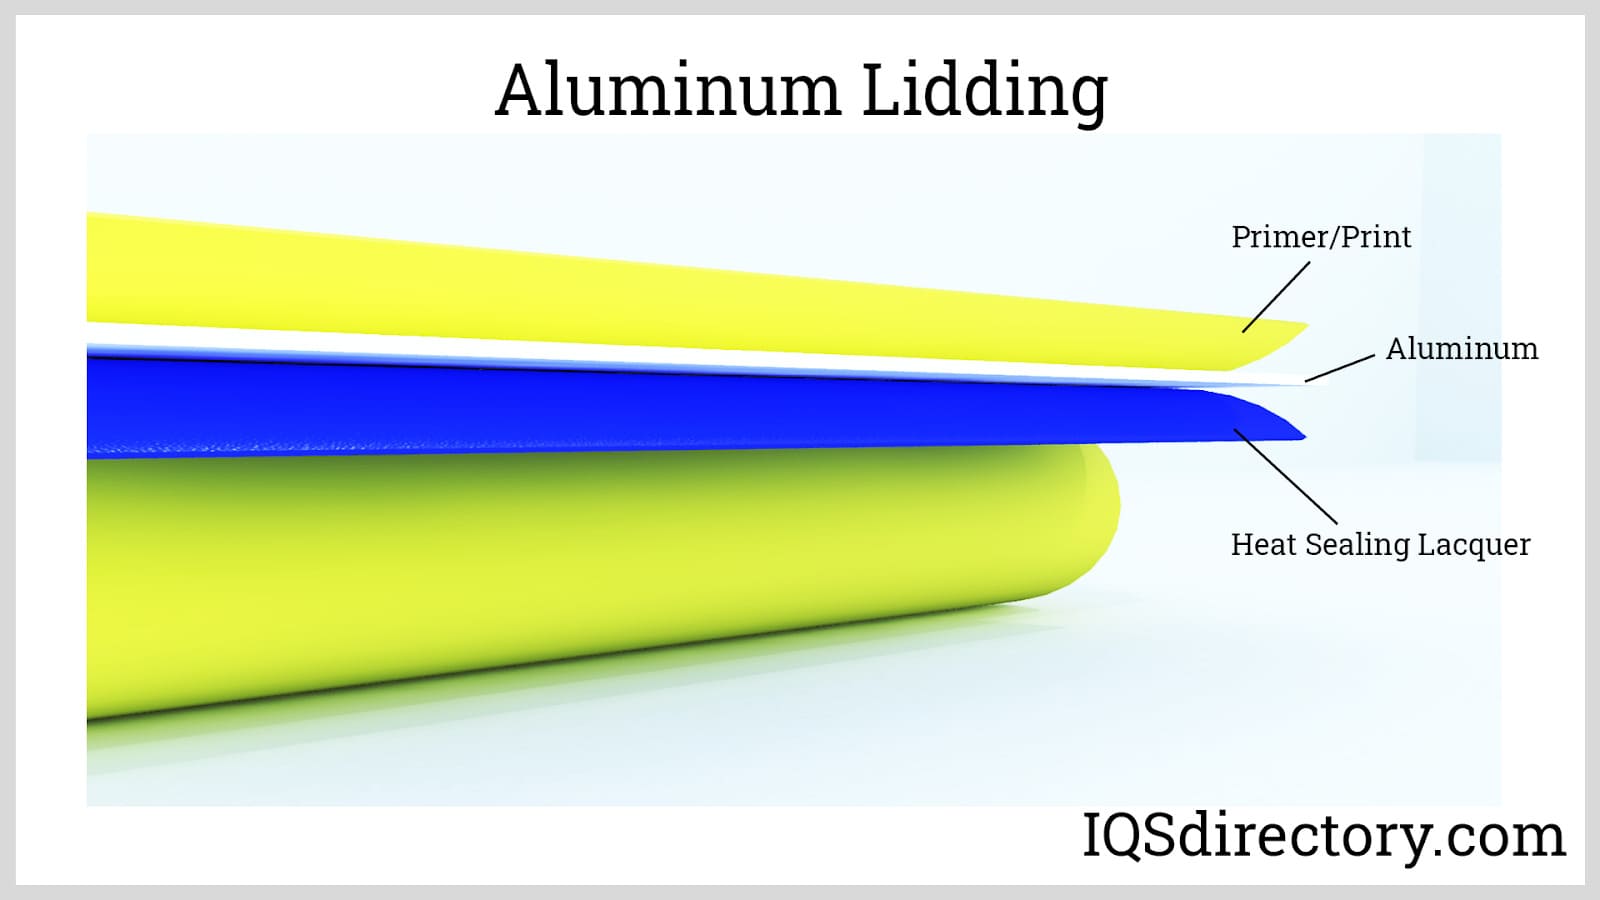 Aluminum Lidding